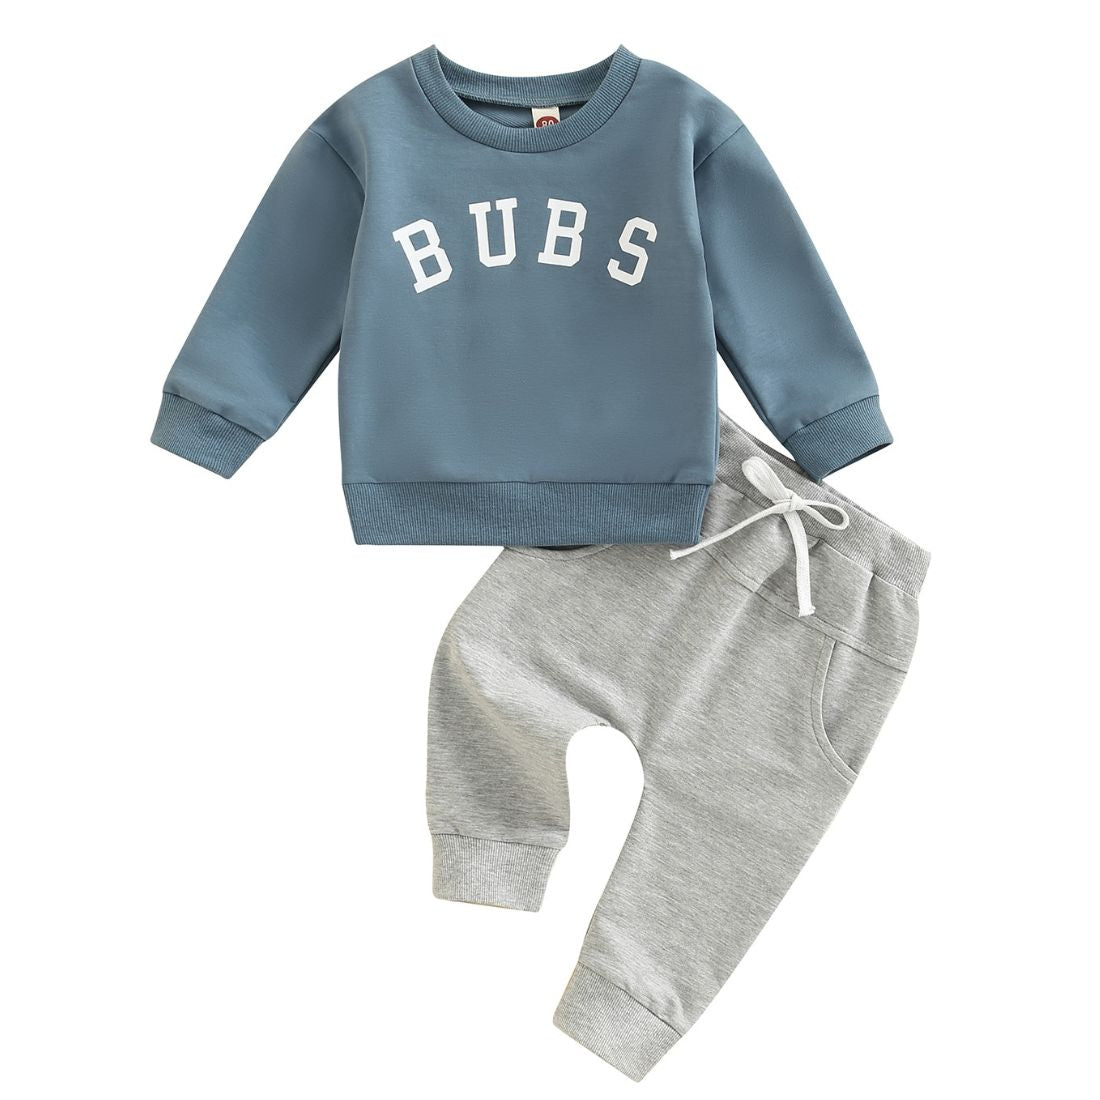 Bubs Sweaty Solid Baby Boy Clothing Set